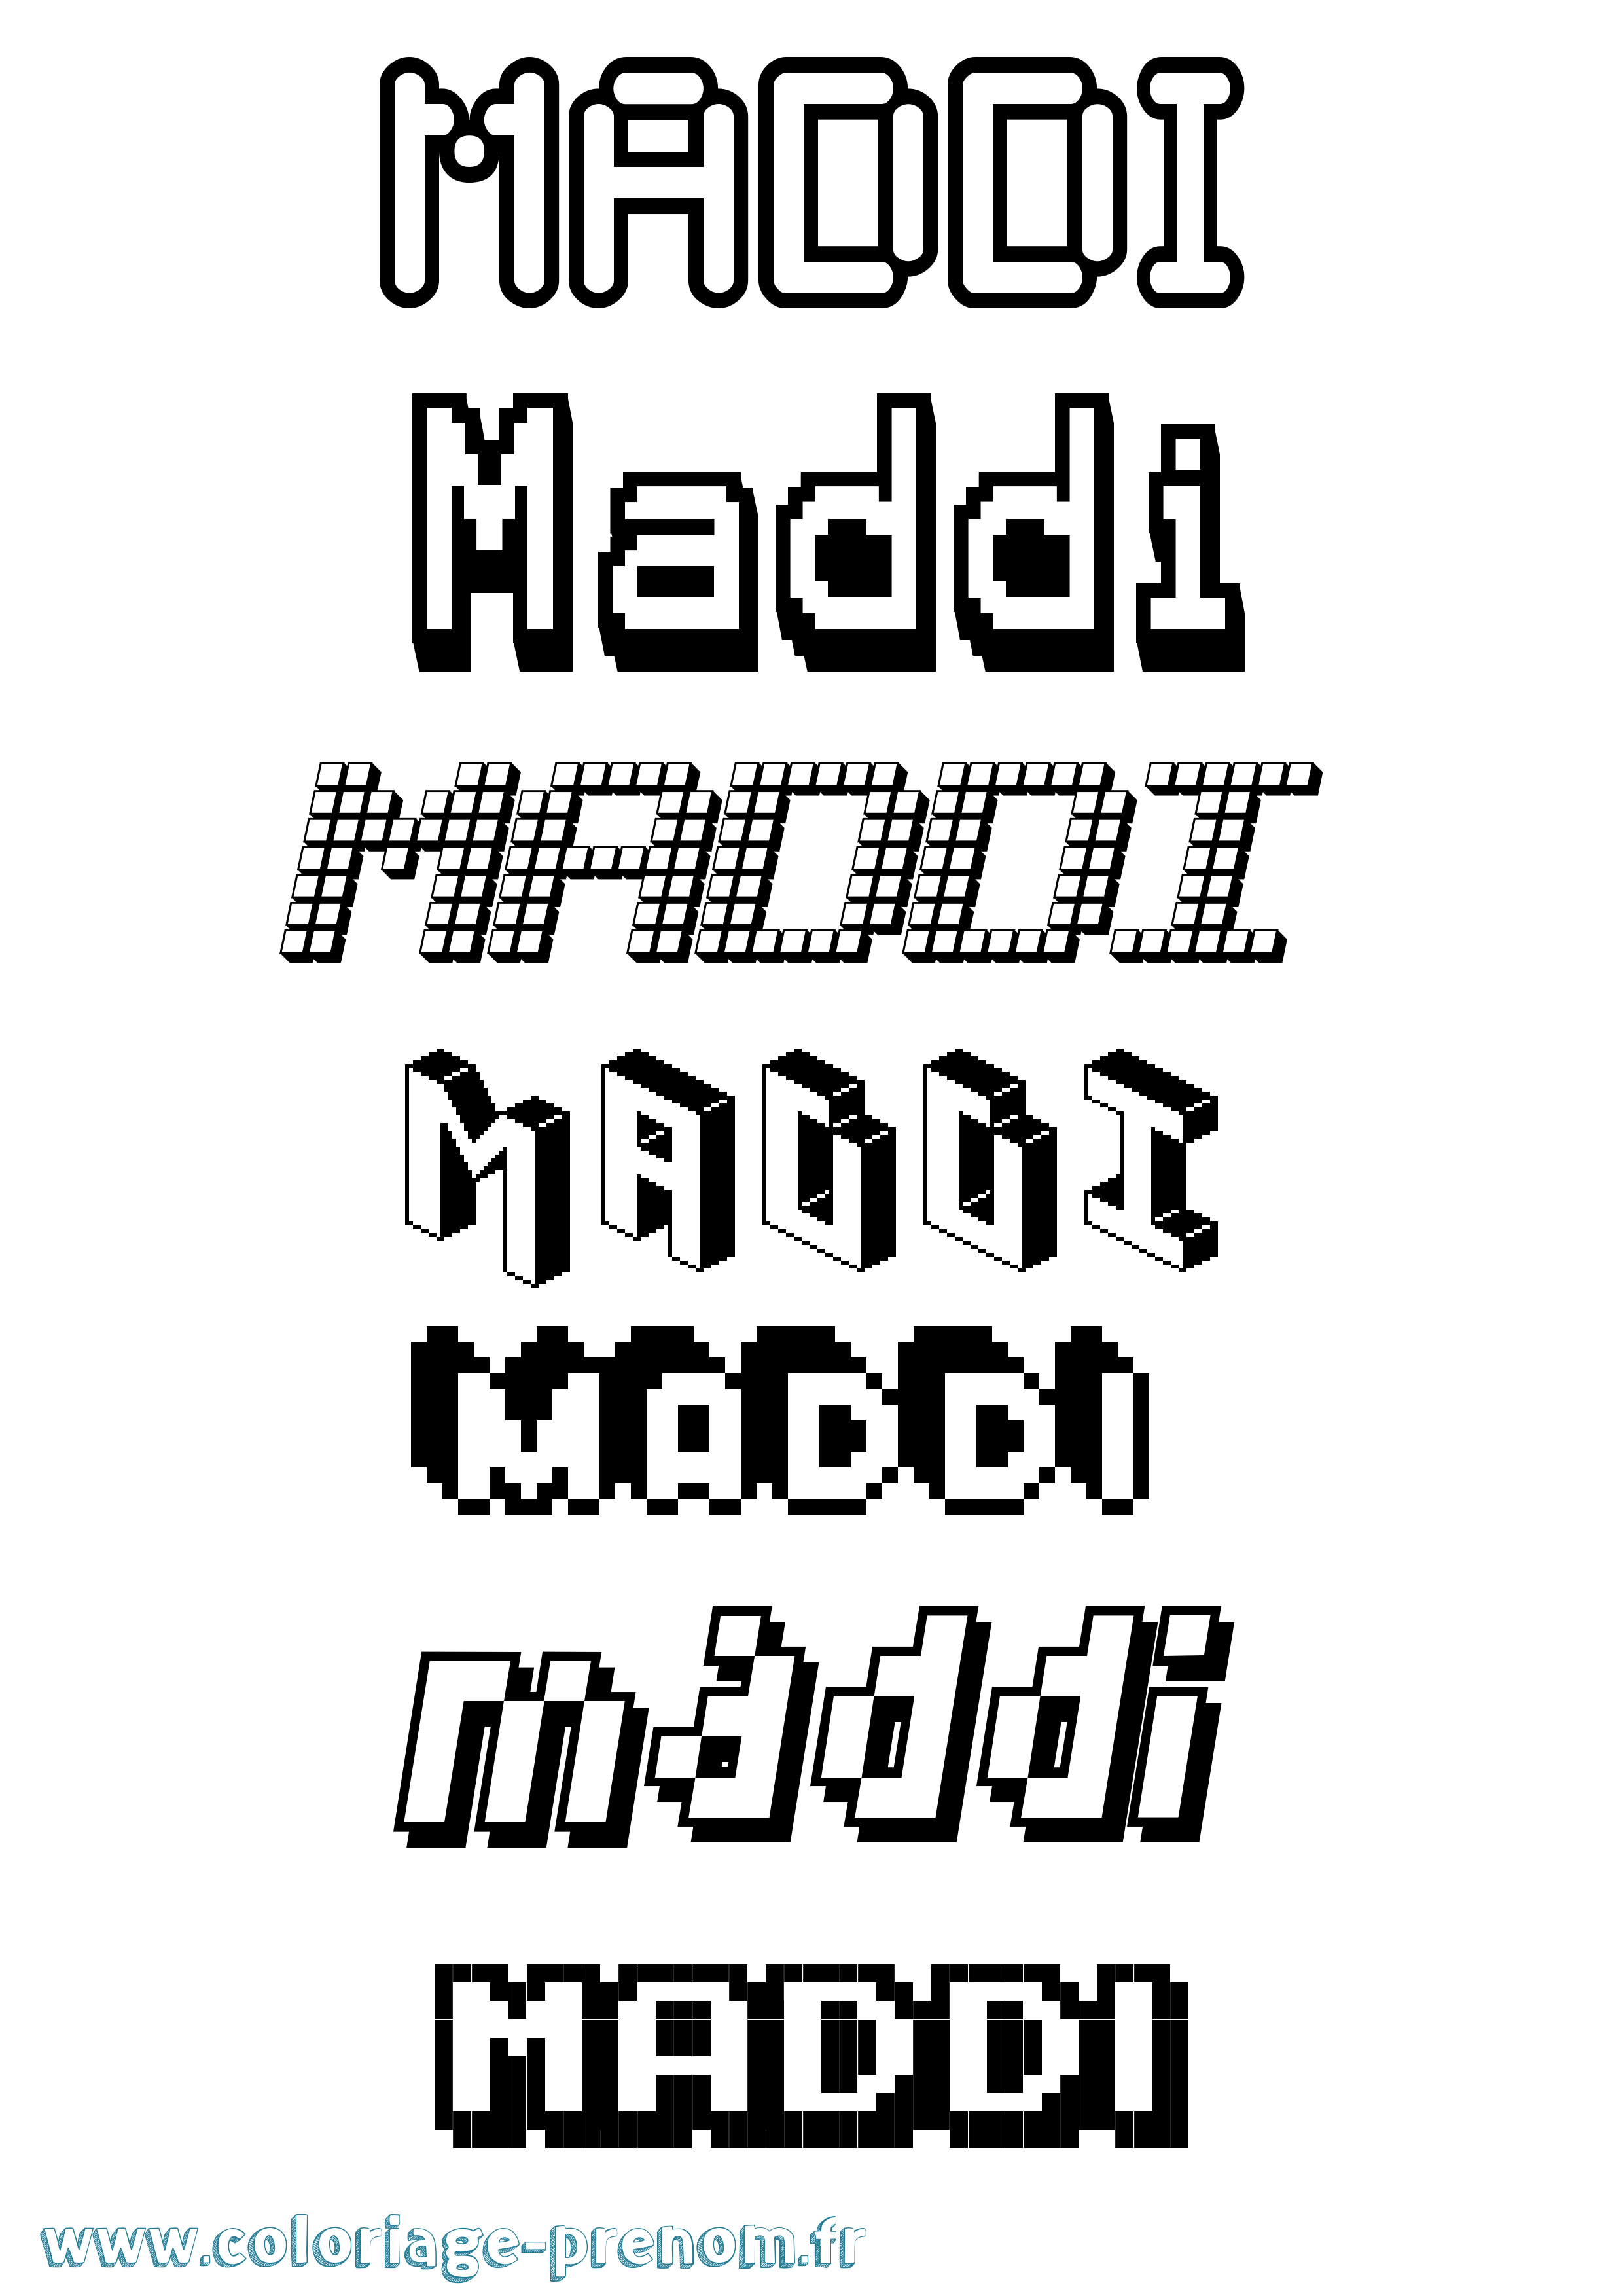 Coloriage prénom Maddi Pixel